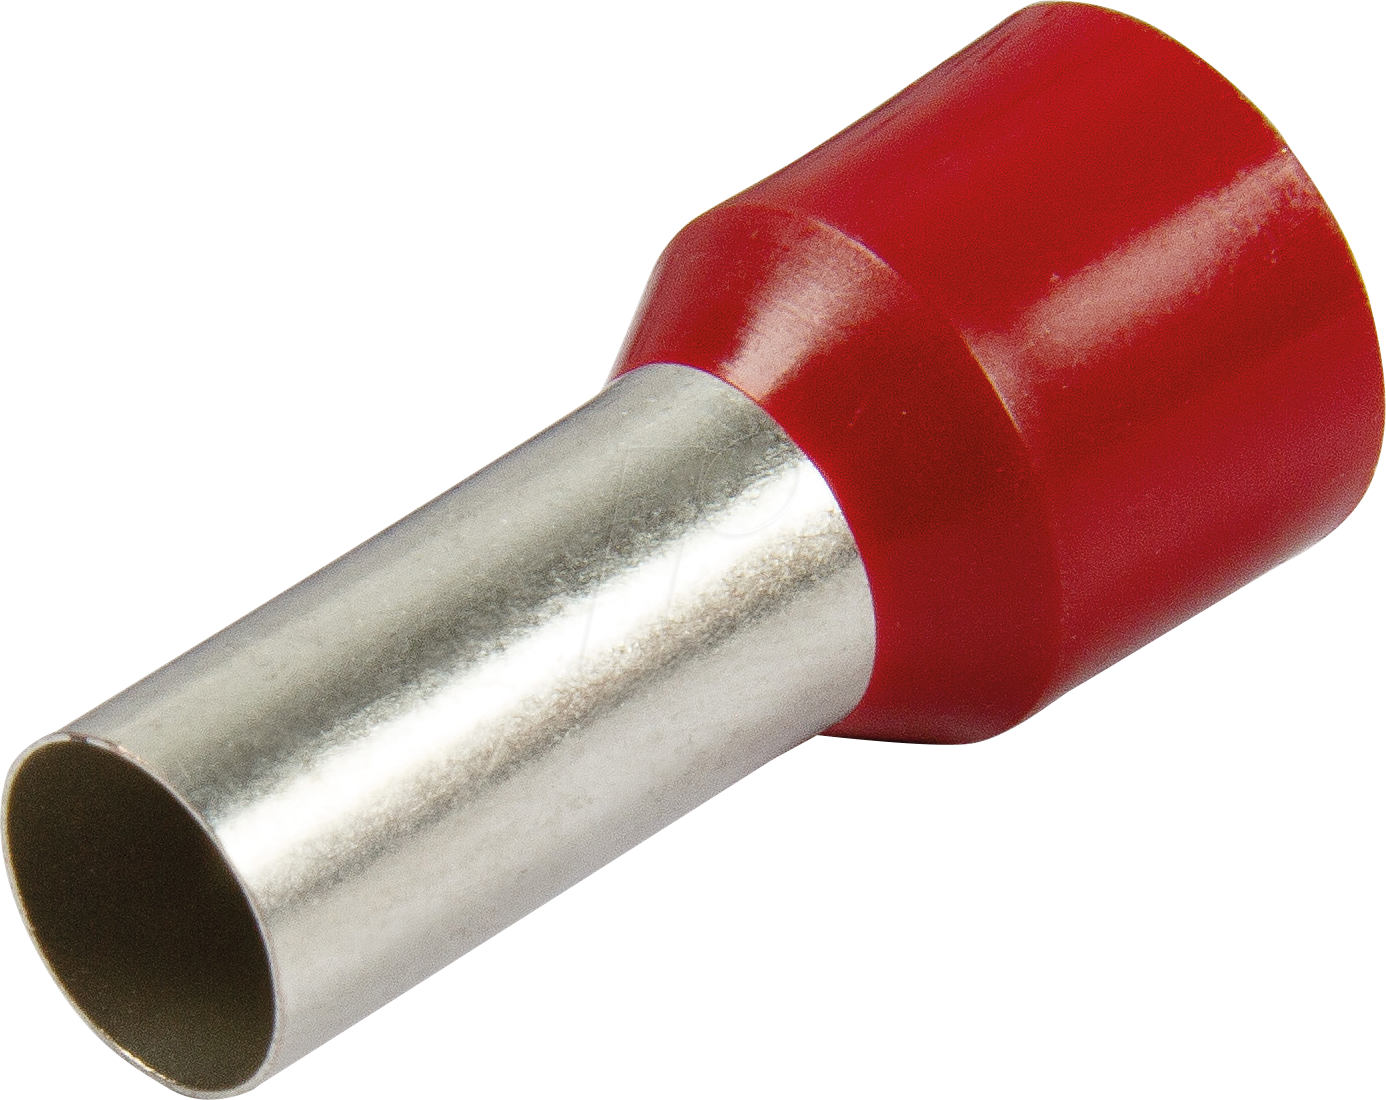 VT AEHUL 35,0-30 - Aderendhülsen, Ø 35,0 mm², 30 mm, rot, 100er-Pack von VOGT AG